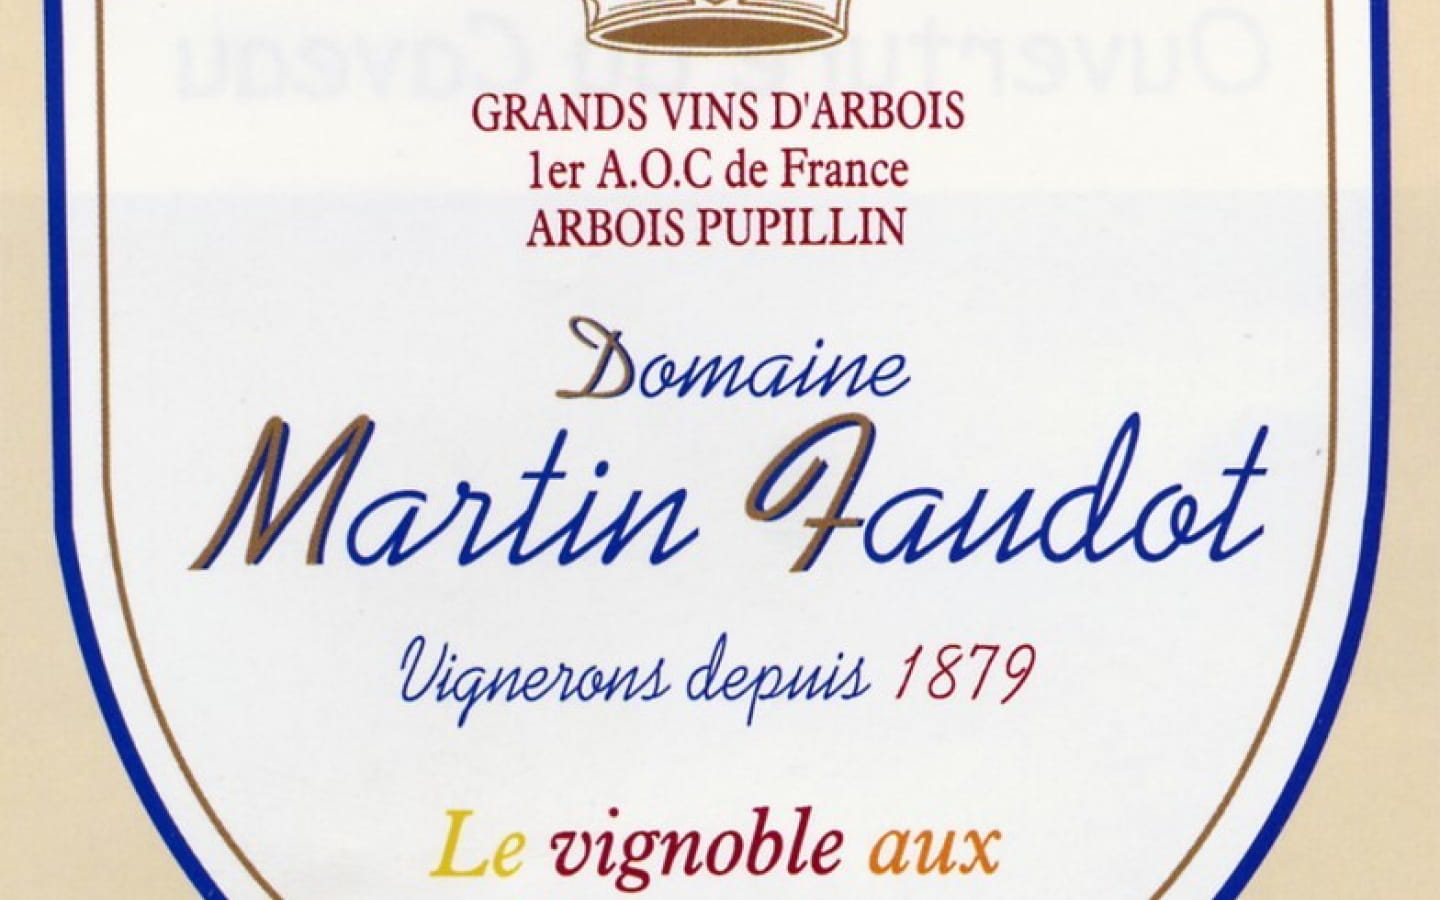 Domaine Martin Faudot